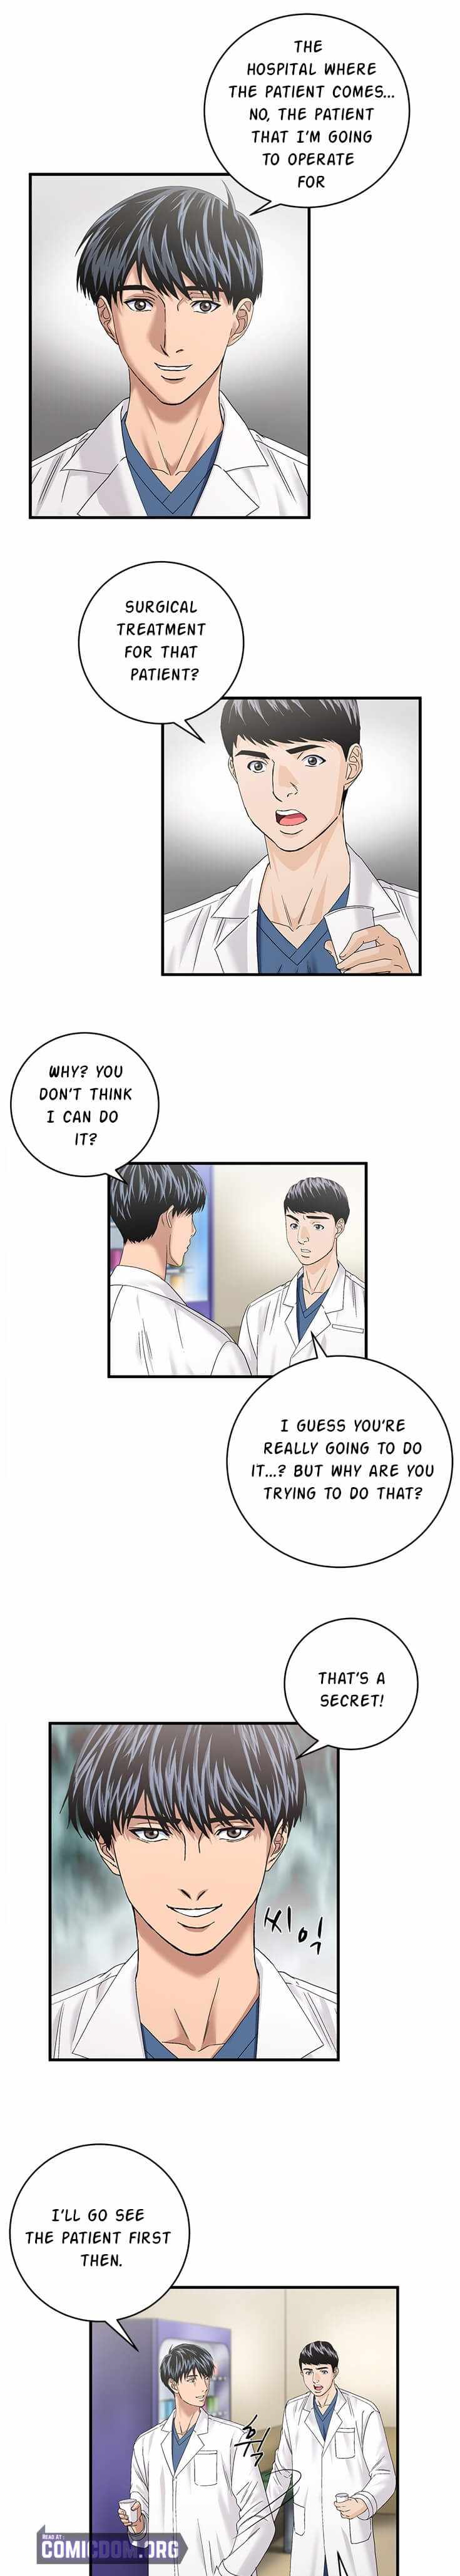 Dr. Choi Tae-Soo Chapter 74-eng-li - Page 4